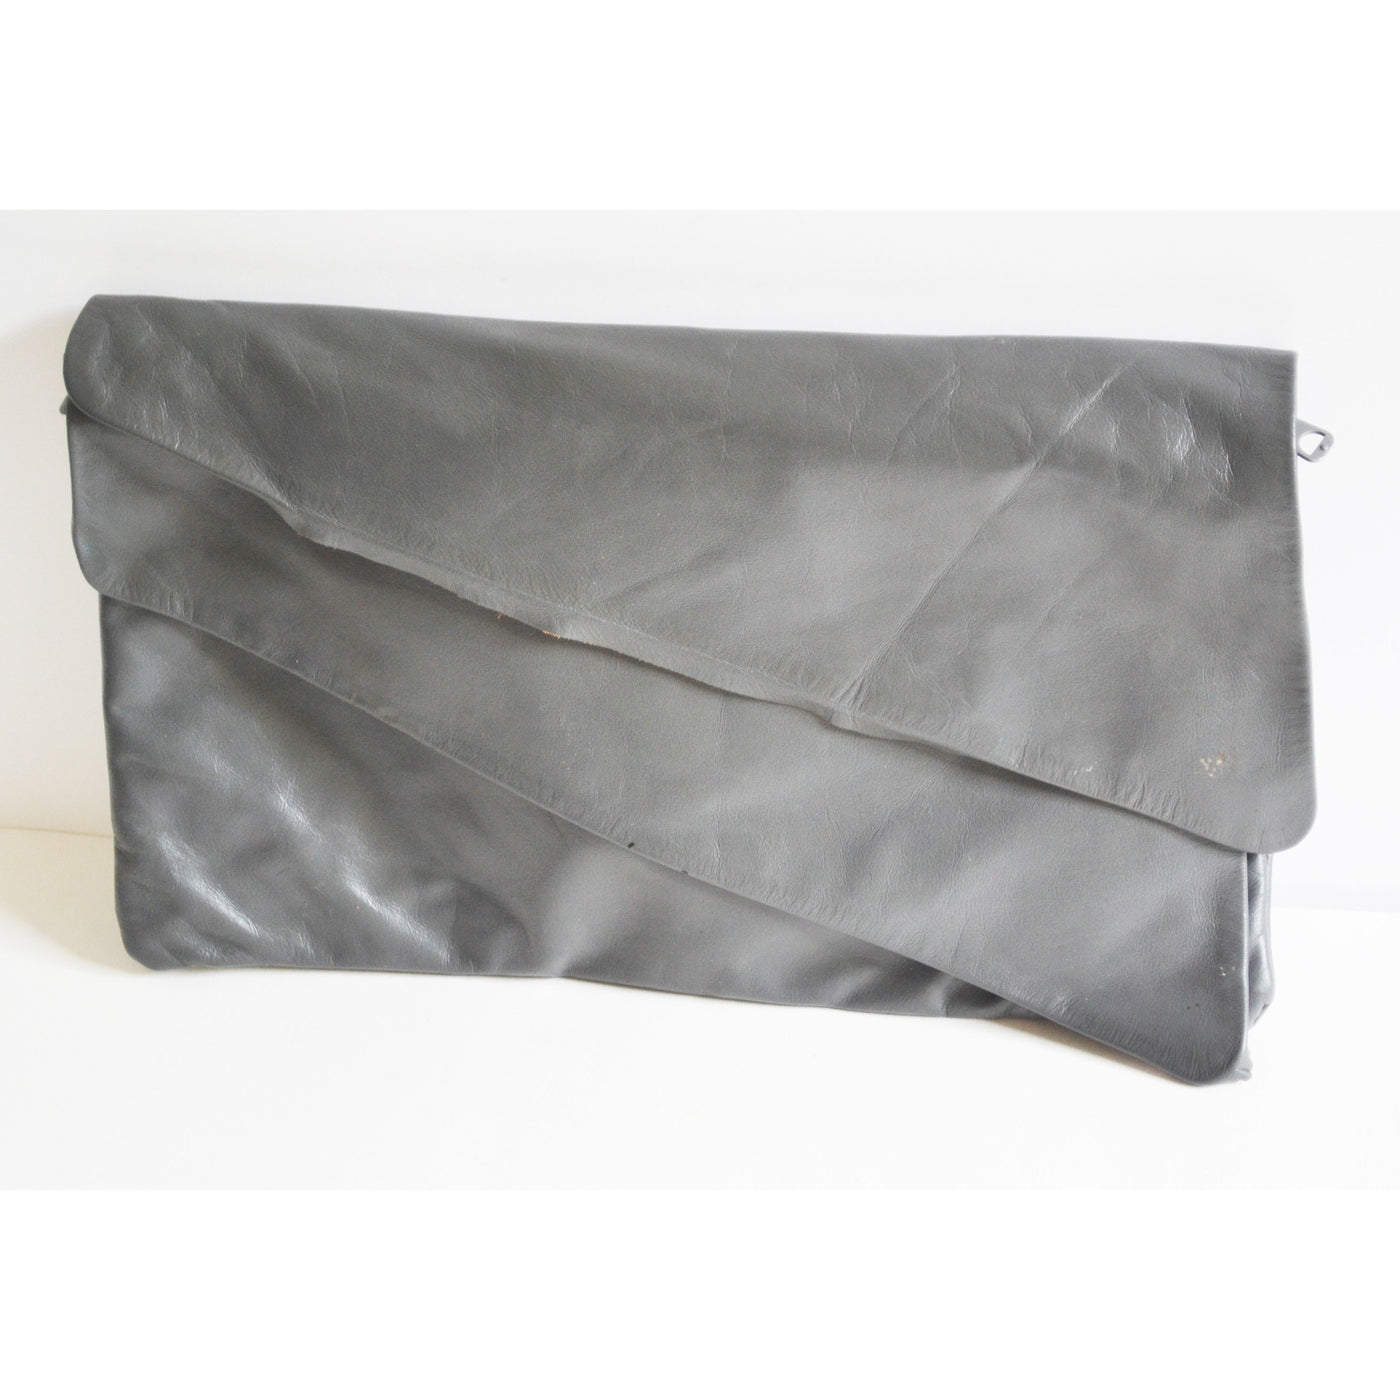 Vintage Grey Flap Leather Clutch Purse